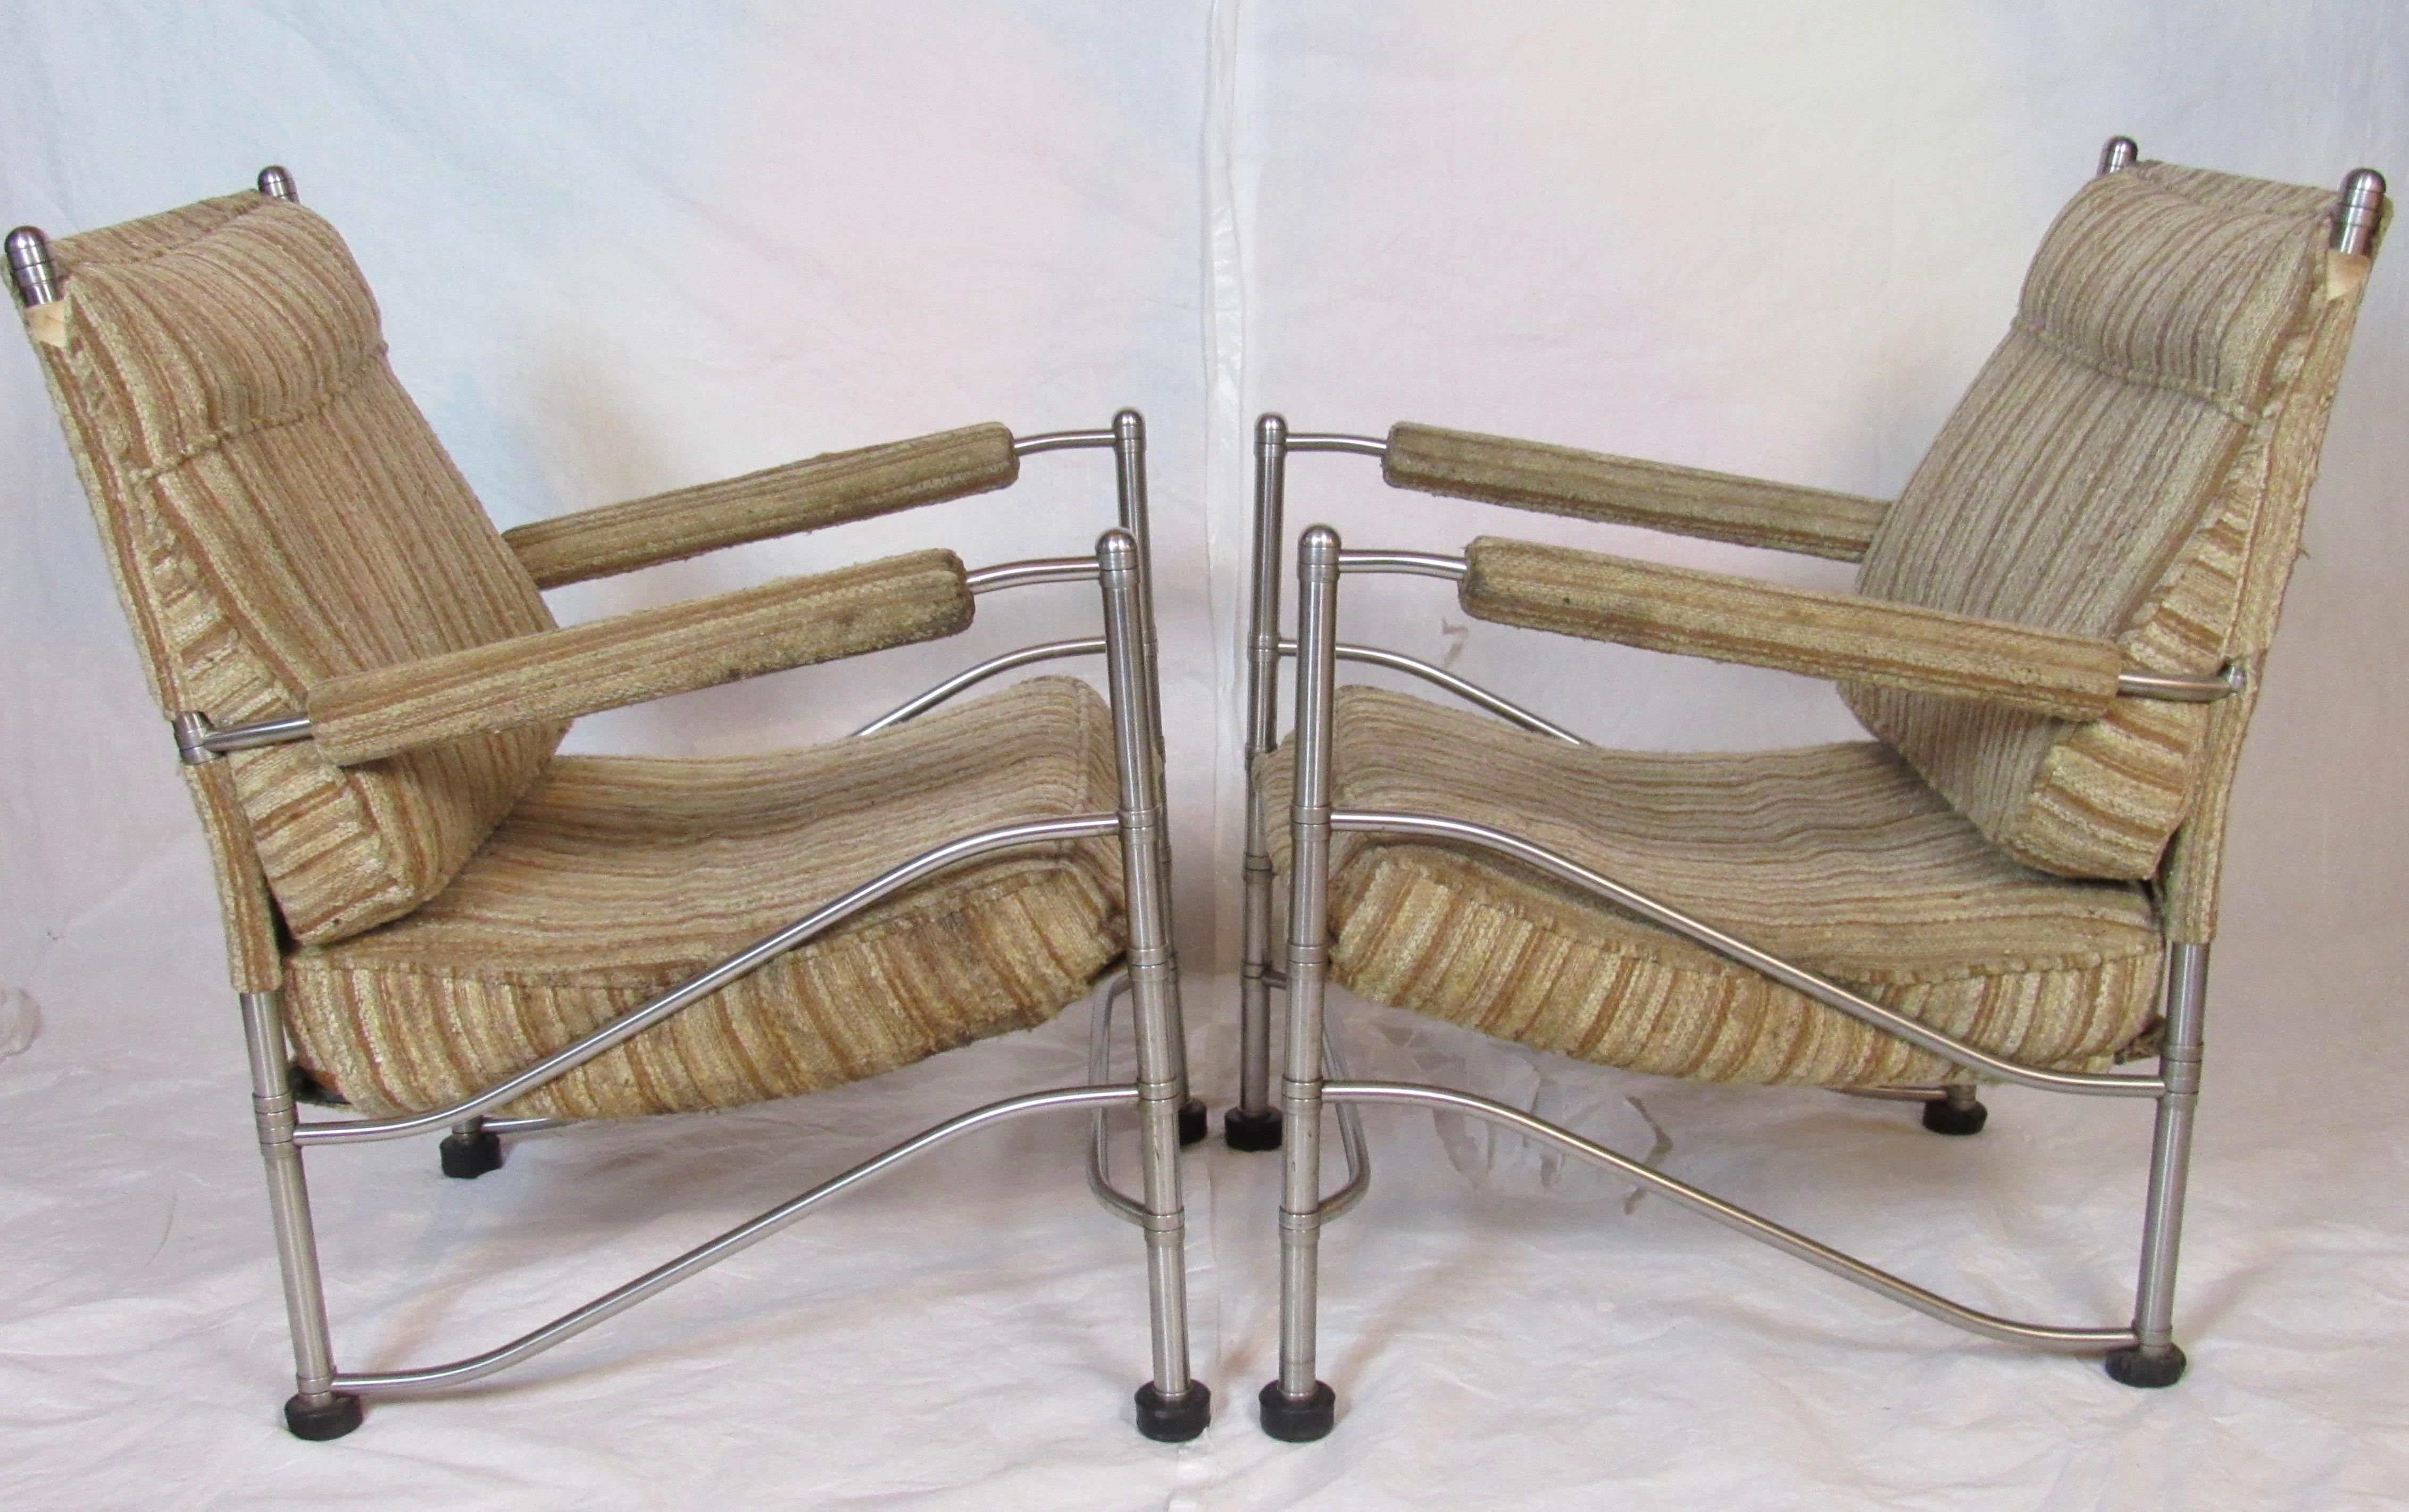 Machine Age Pair of Lounge Chairs Warren McArthur Style No. 1014 AUR, circa 1935